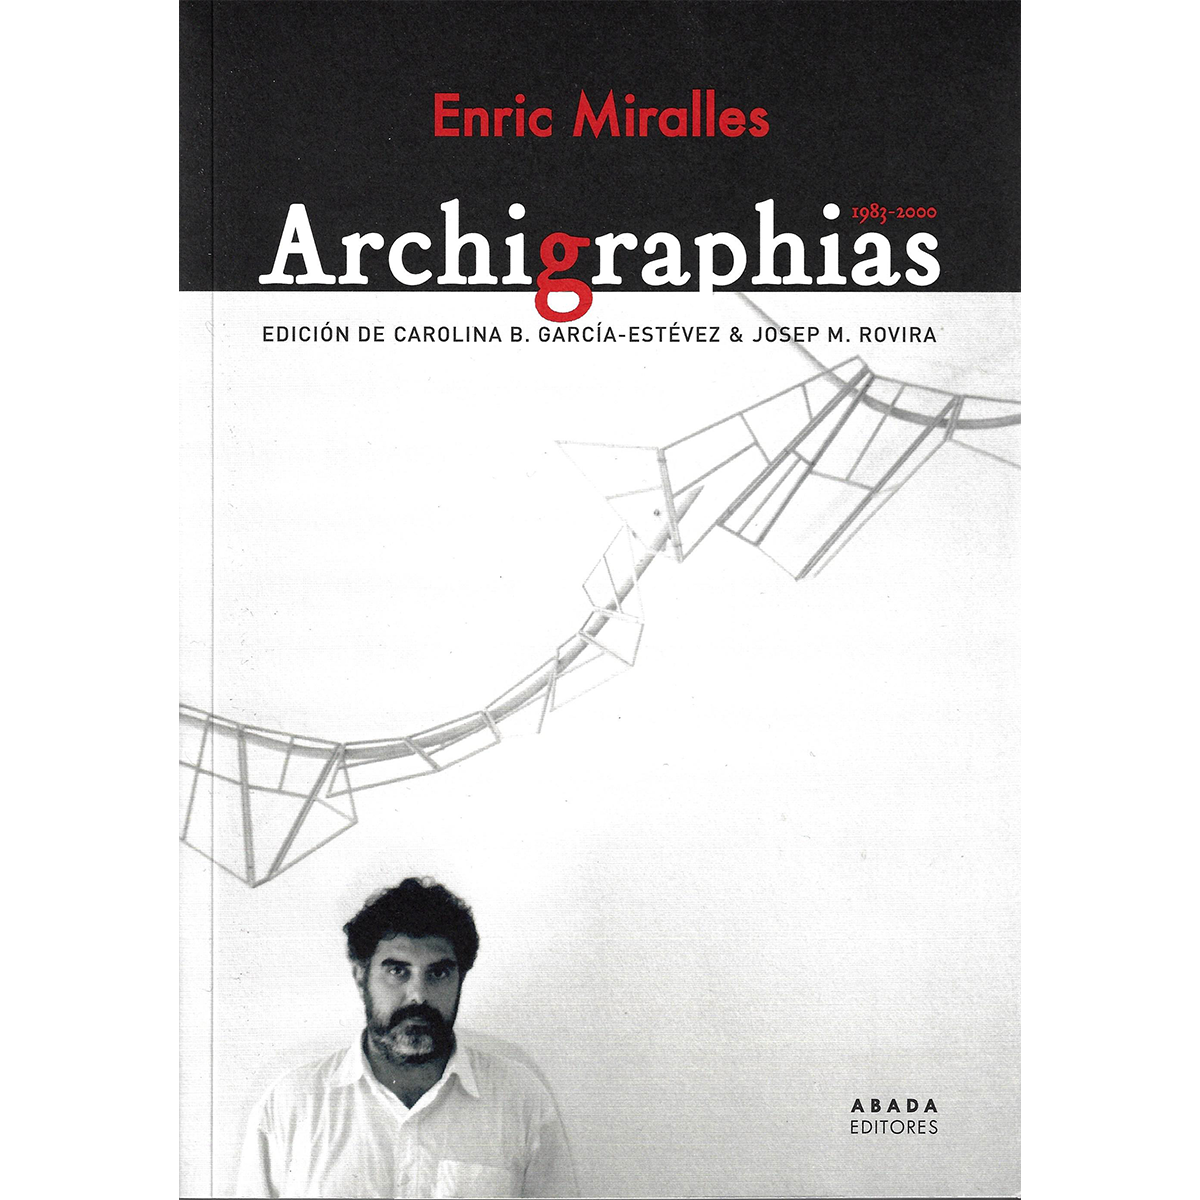 Enric Miralles: Archigraphias